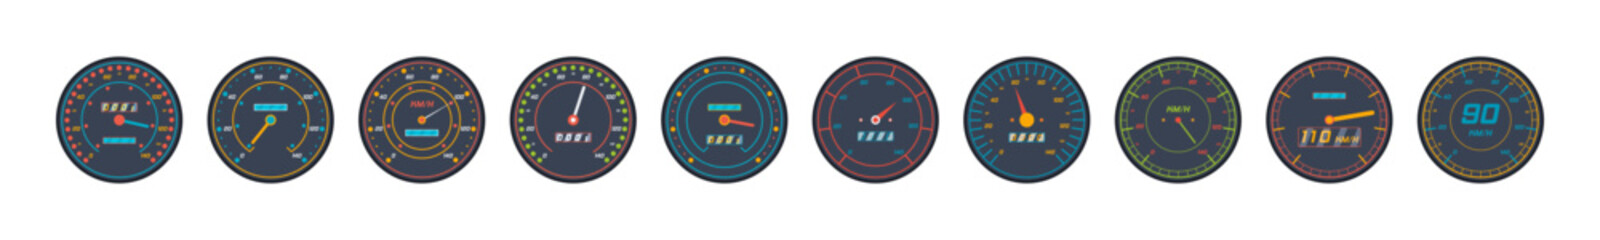 Set of car speedometer level indicator icons isolated on white background. Engine speedometer icons set in flat design. Vector illustration